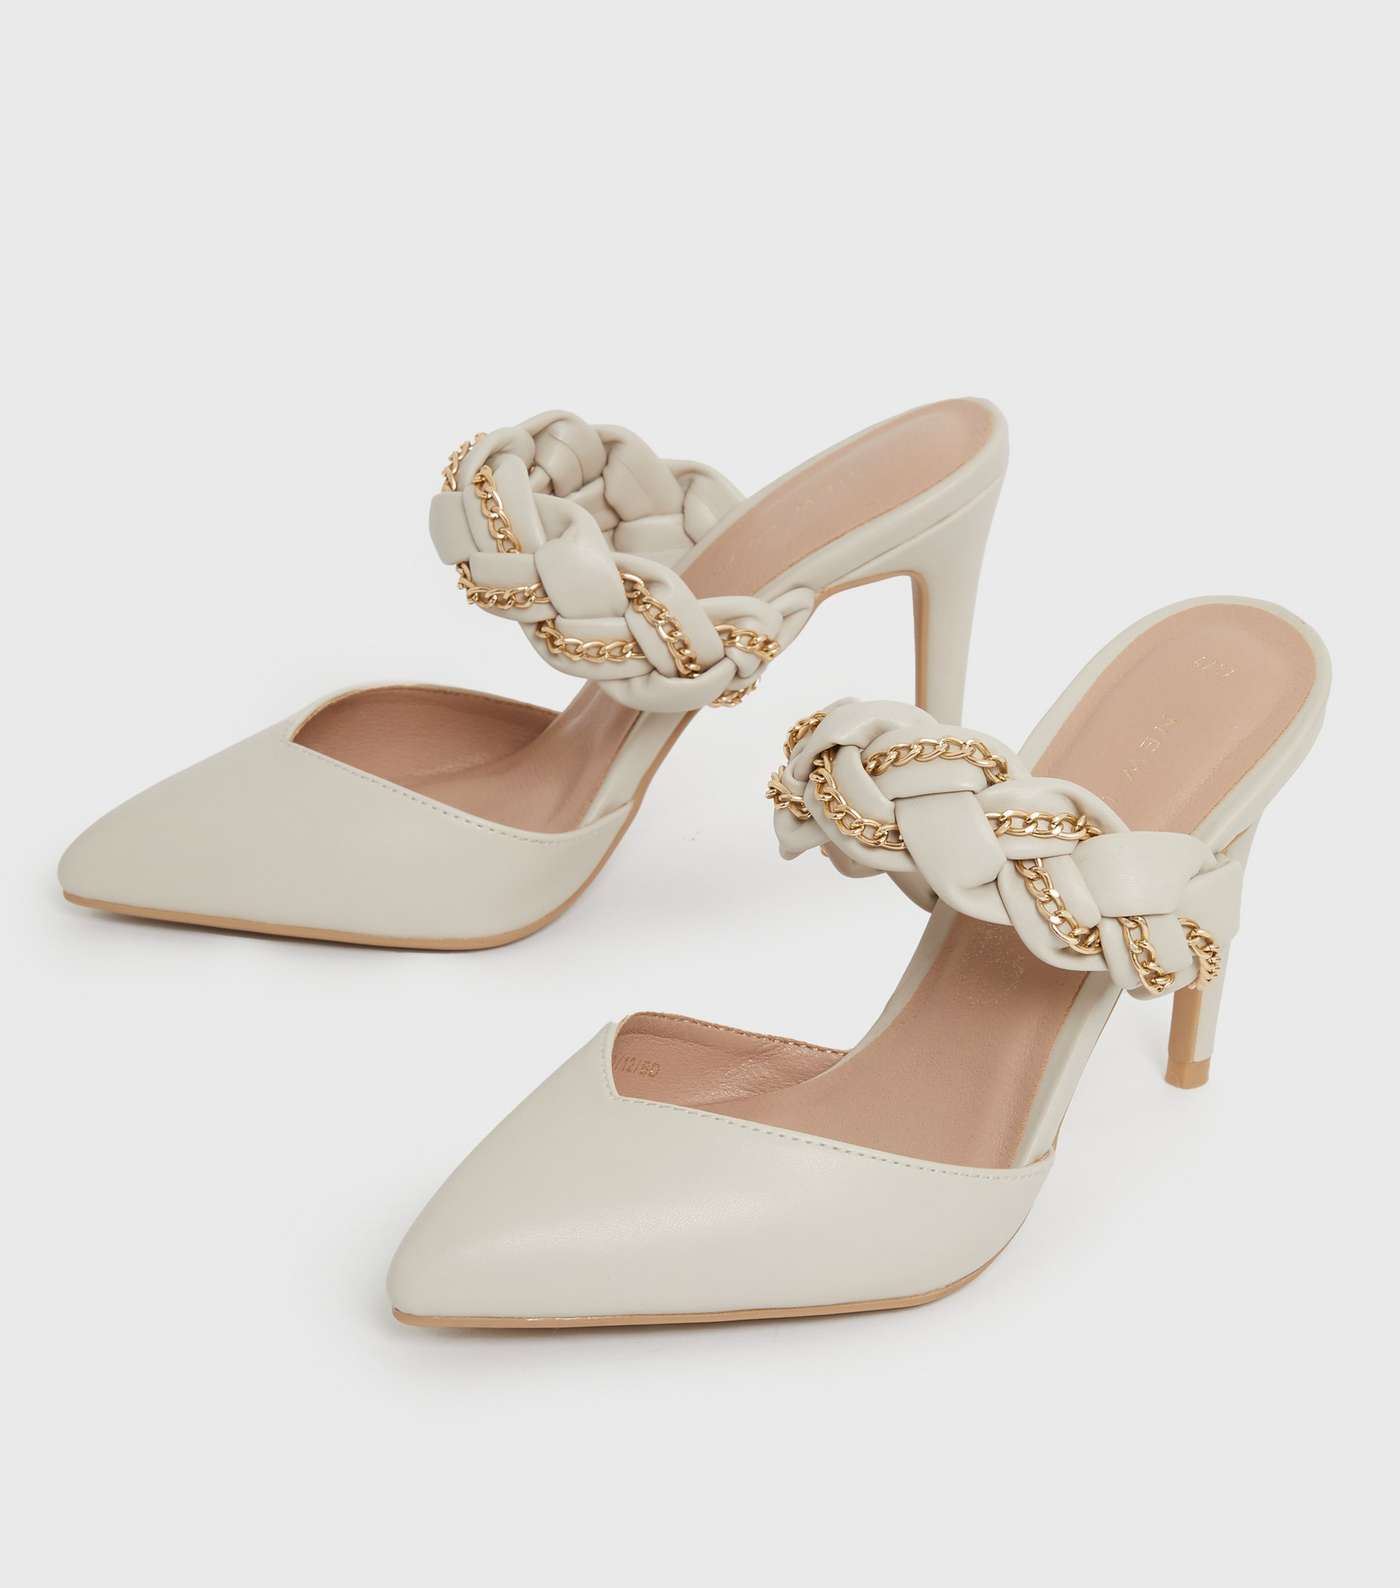 Off White Plaited Stiletto Heel Court Shoes Image 2